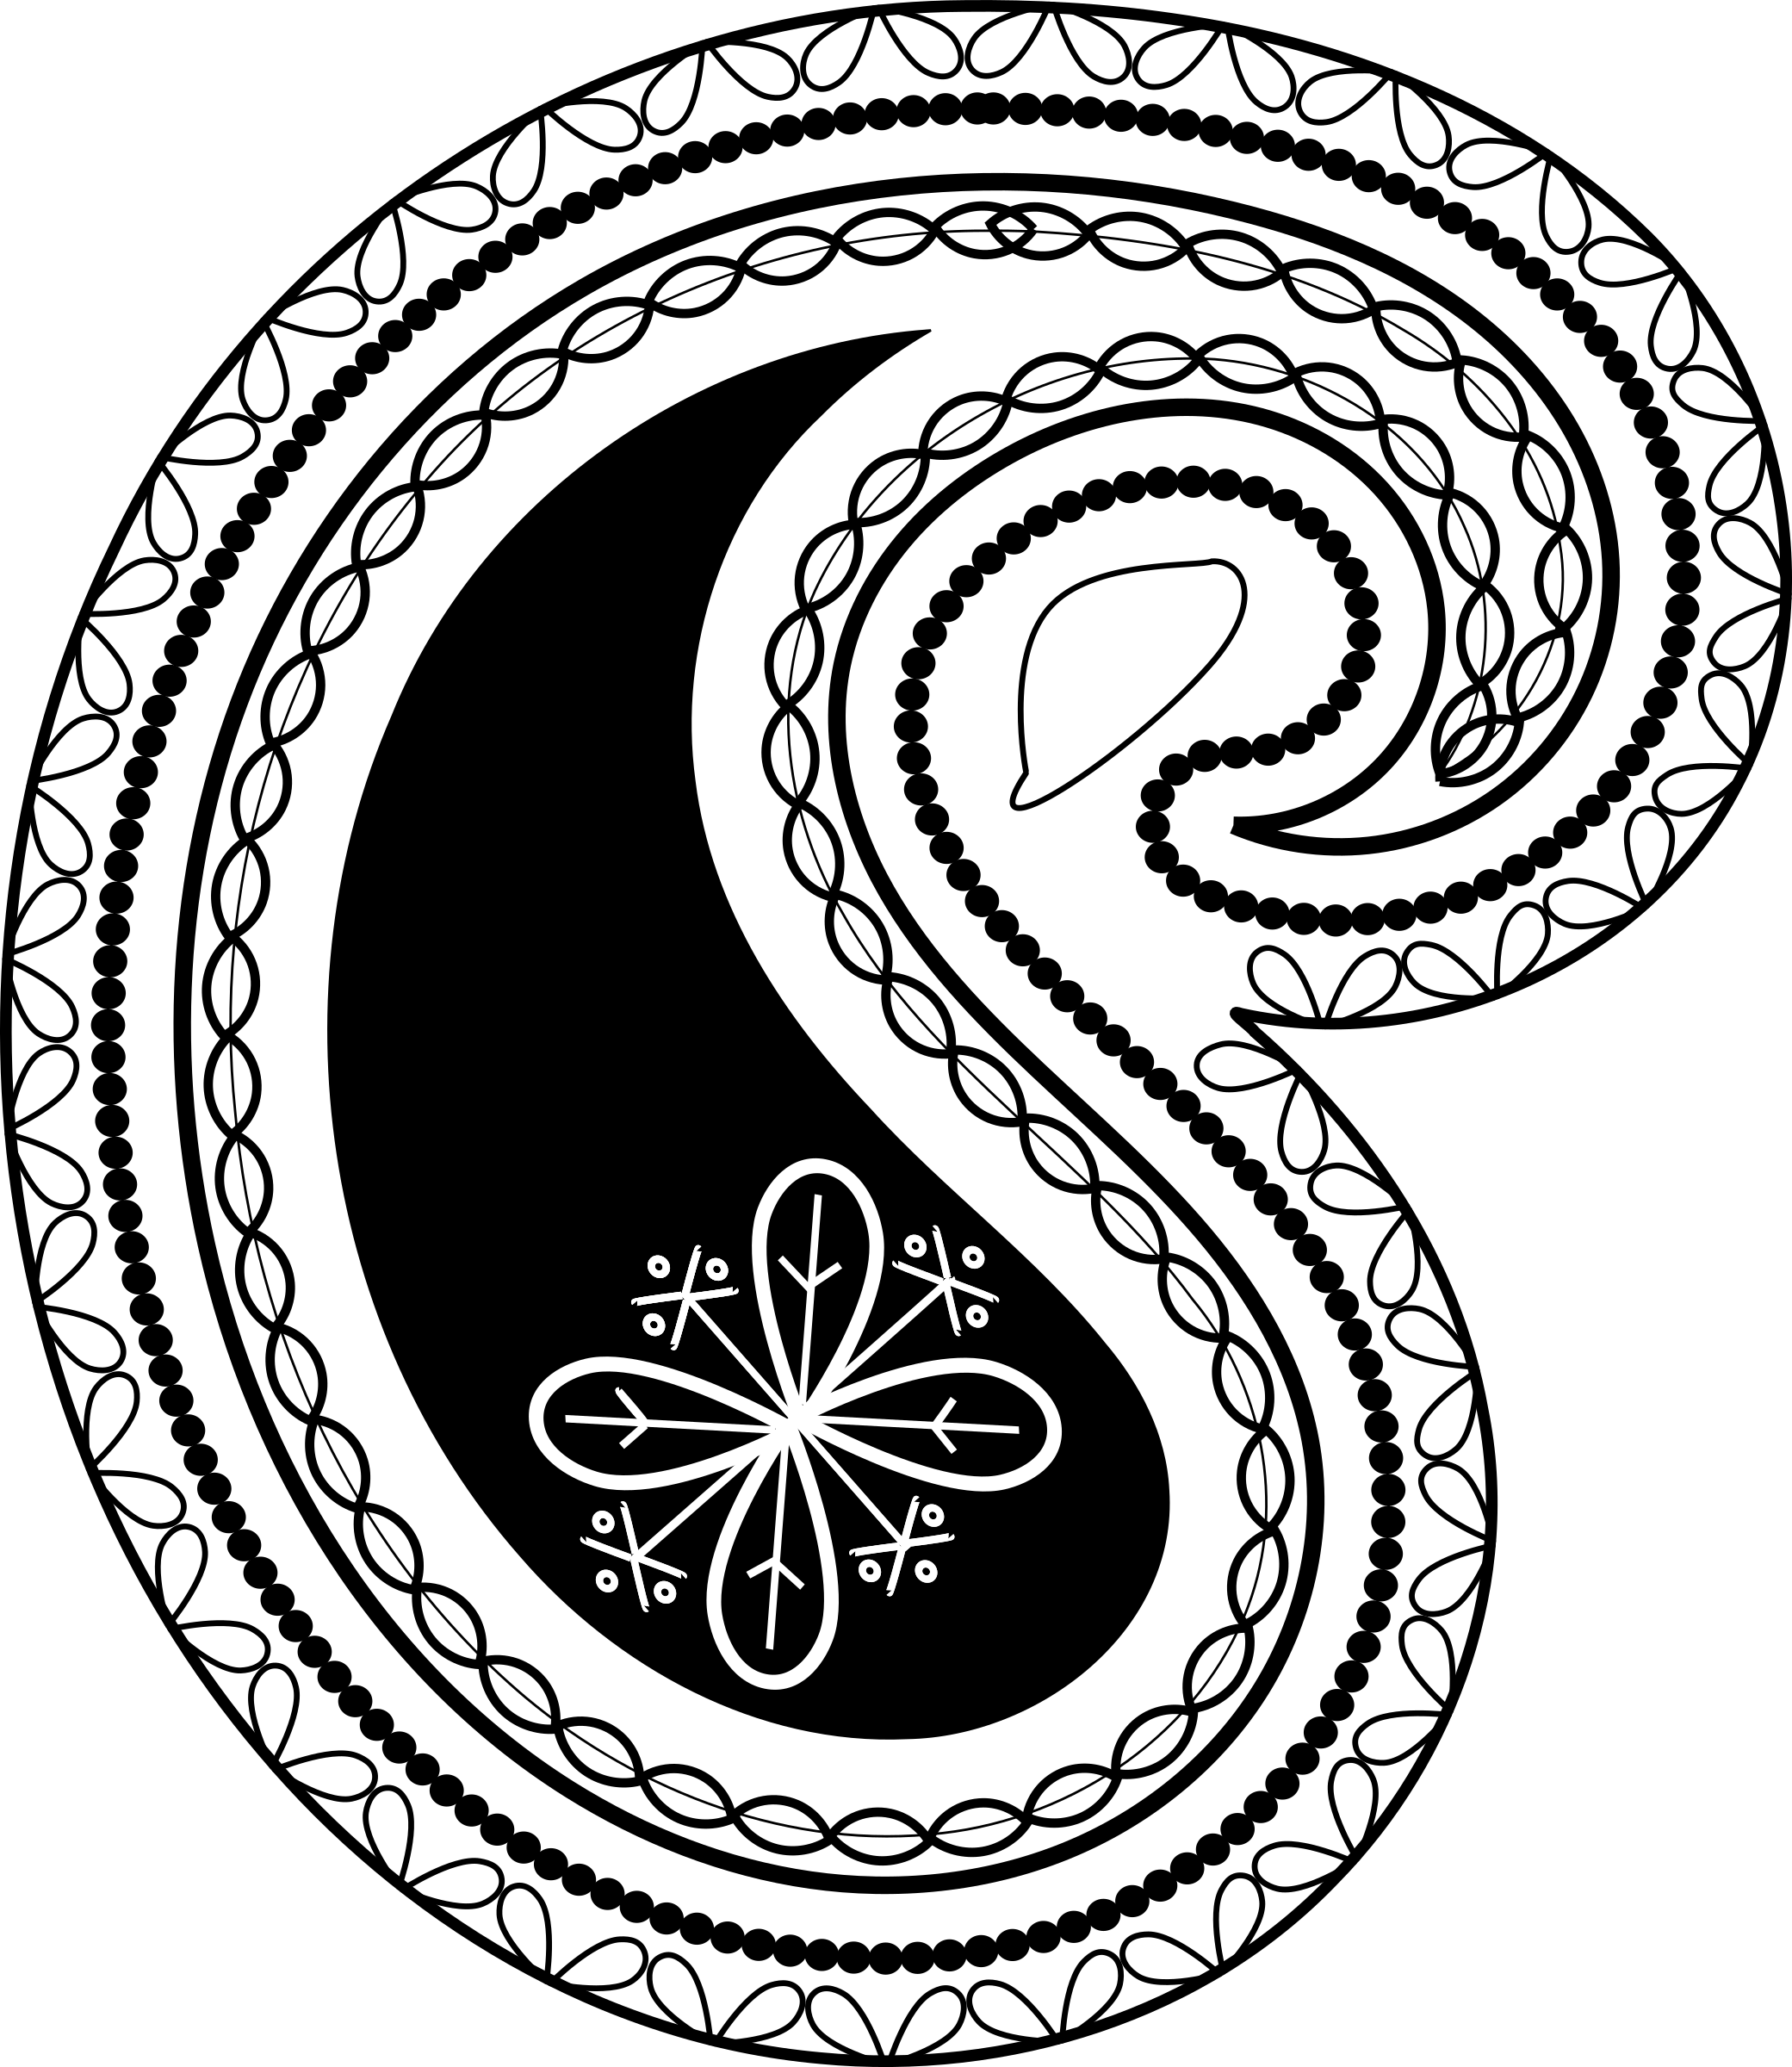 Big Image - Paisley Black And White Pattern (2081x2400)